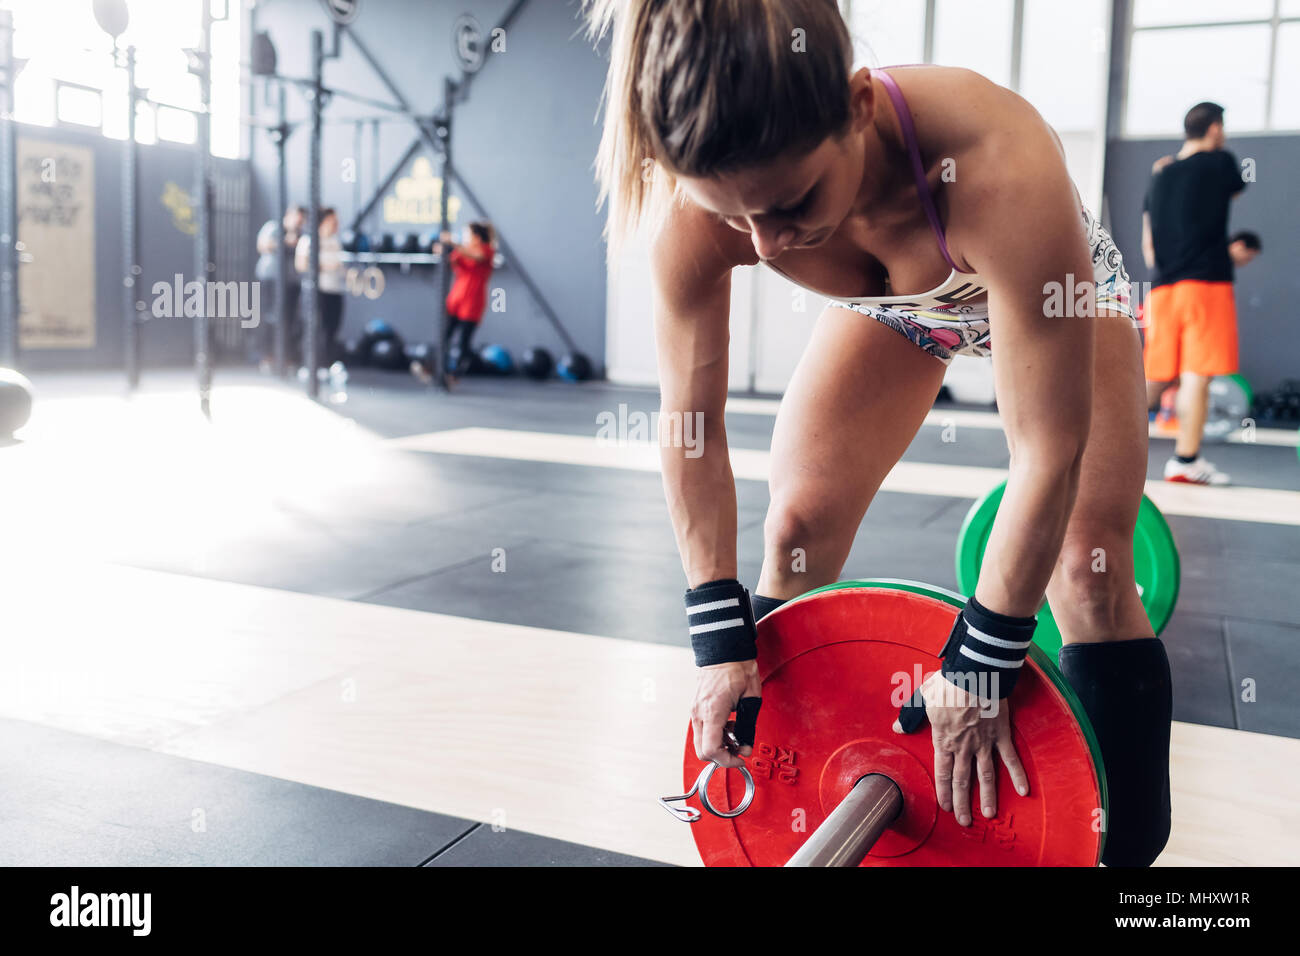 Frau weightlifting Barbell in der Turnhalle Stockfoto